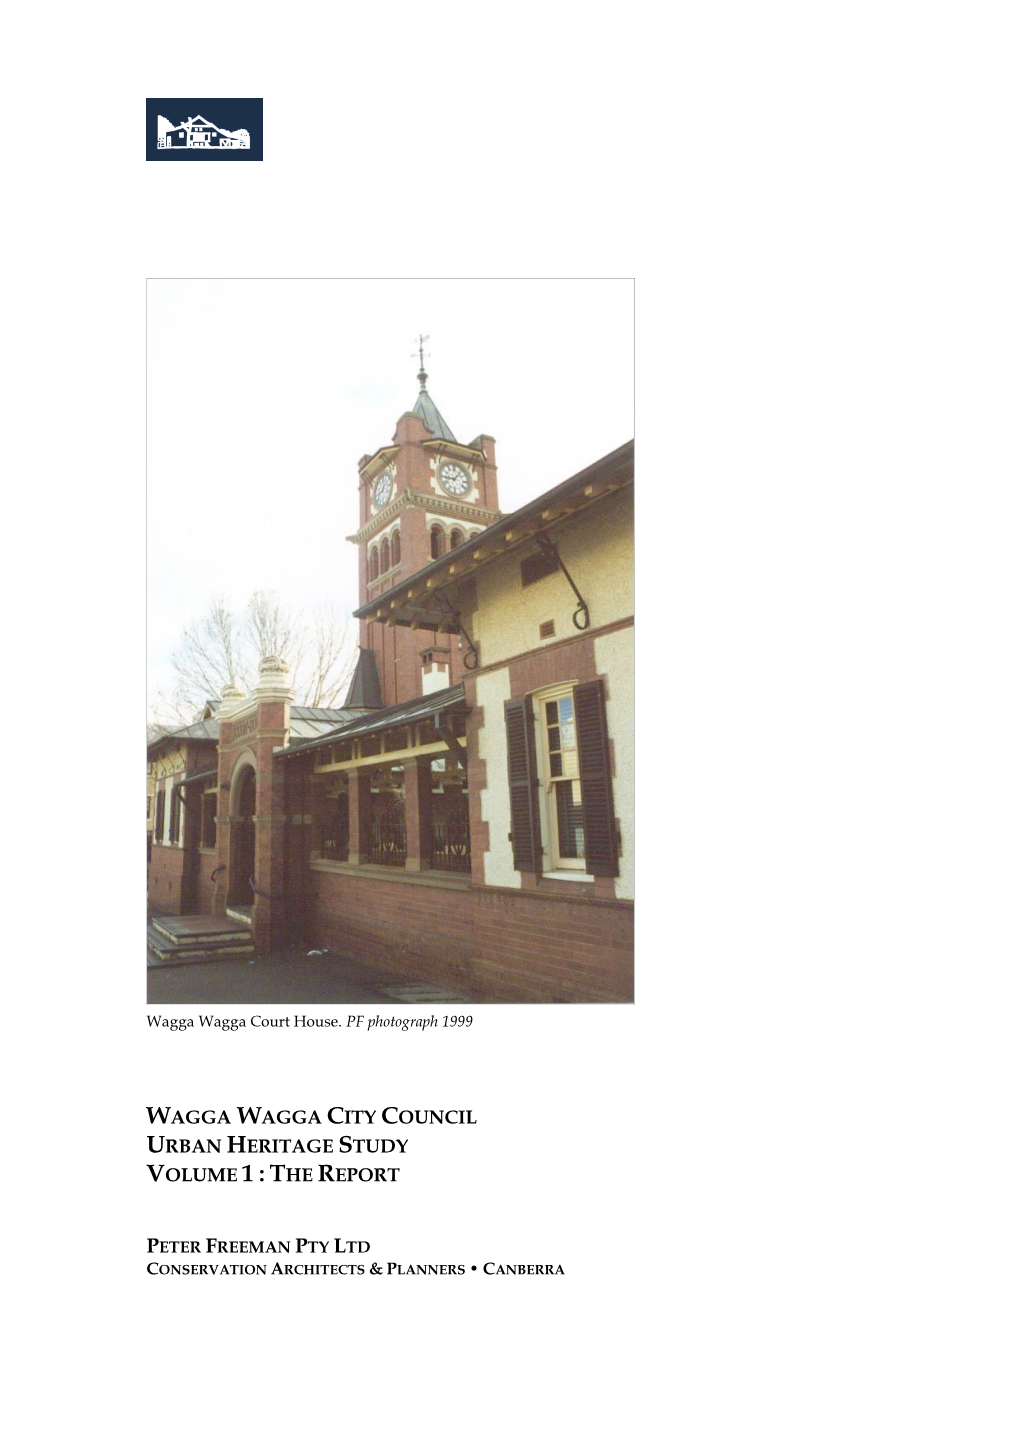 Wagga Wagga City Council Urban Heritage Study Volume 1 : the Report